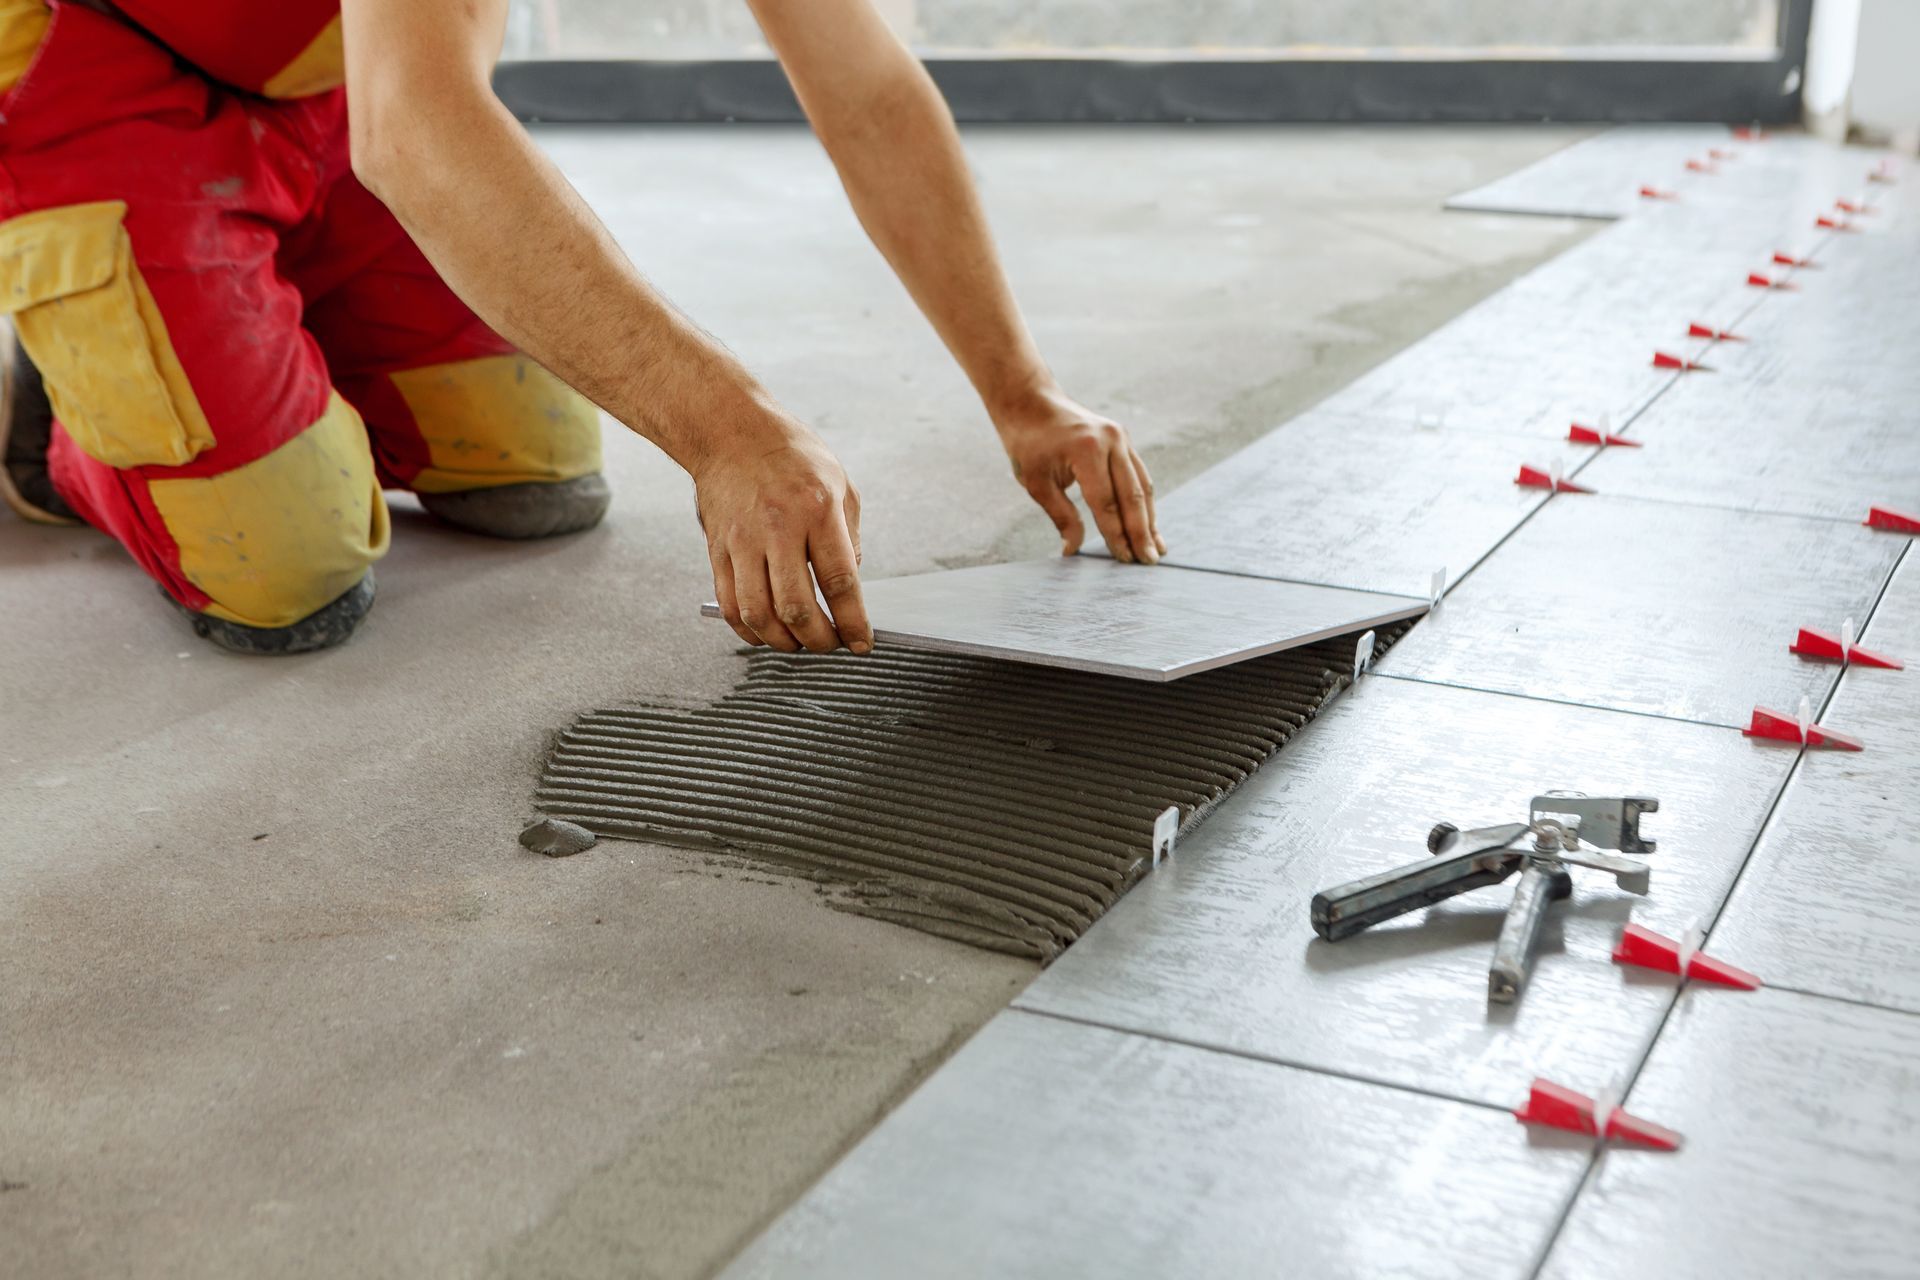 Tiler carefully places ceramic wall tile using a lash tile leveling system.